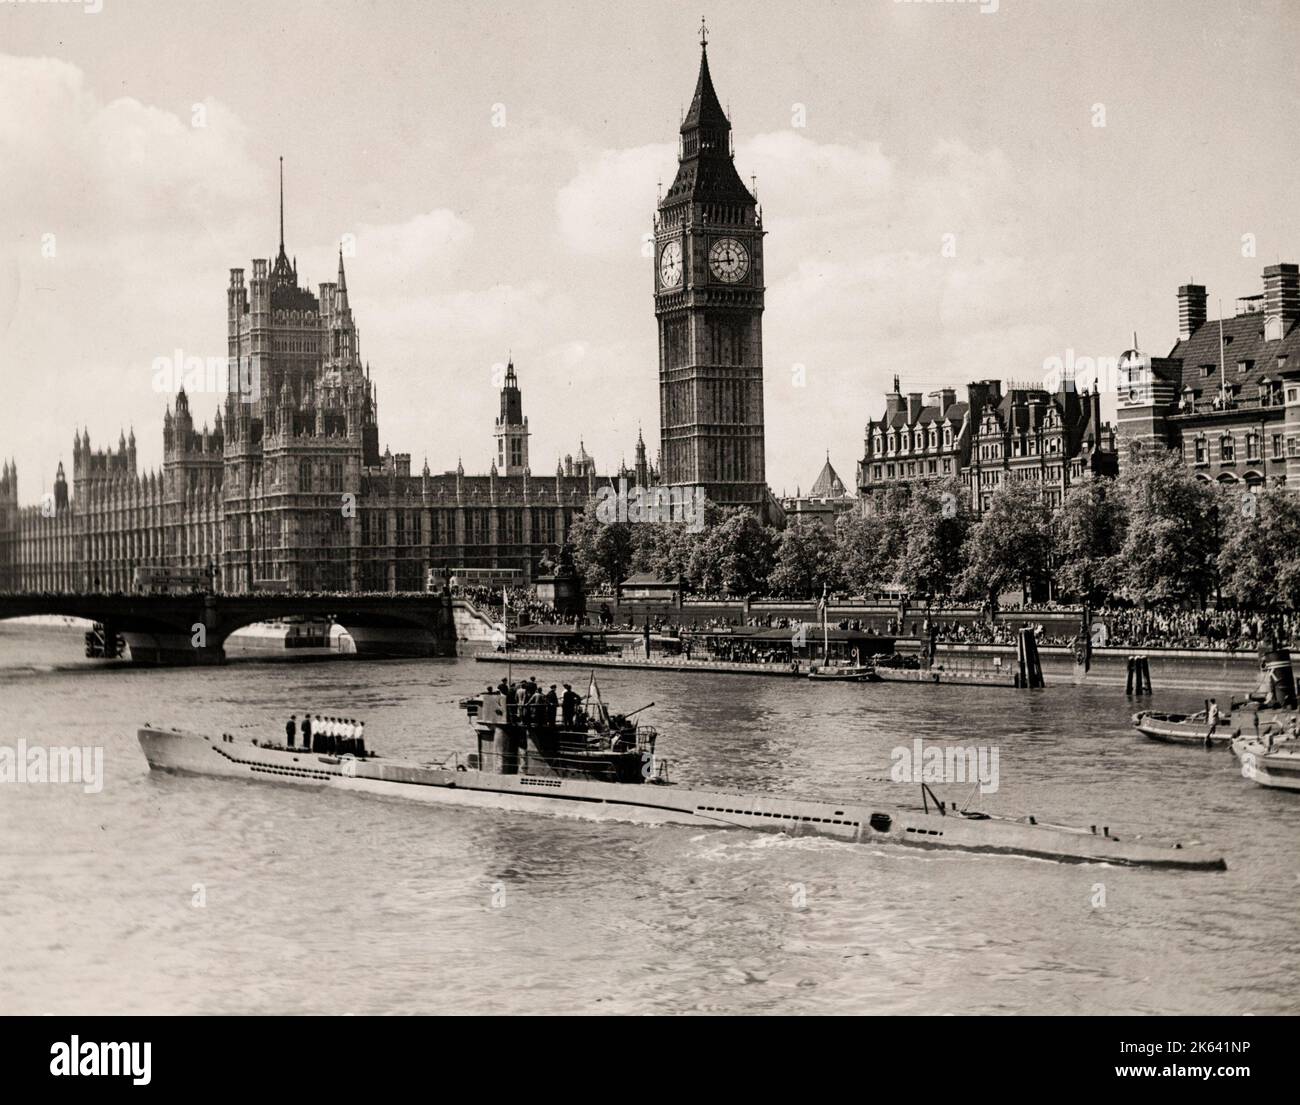 U776 surrendered German U boat being displayed at Westminster Pier, London, end of World War II Stock Photo